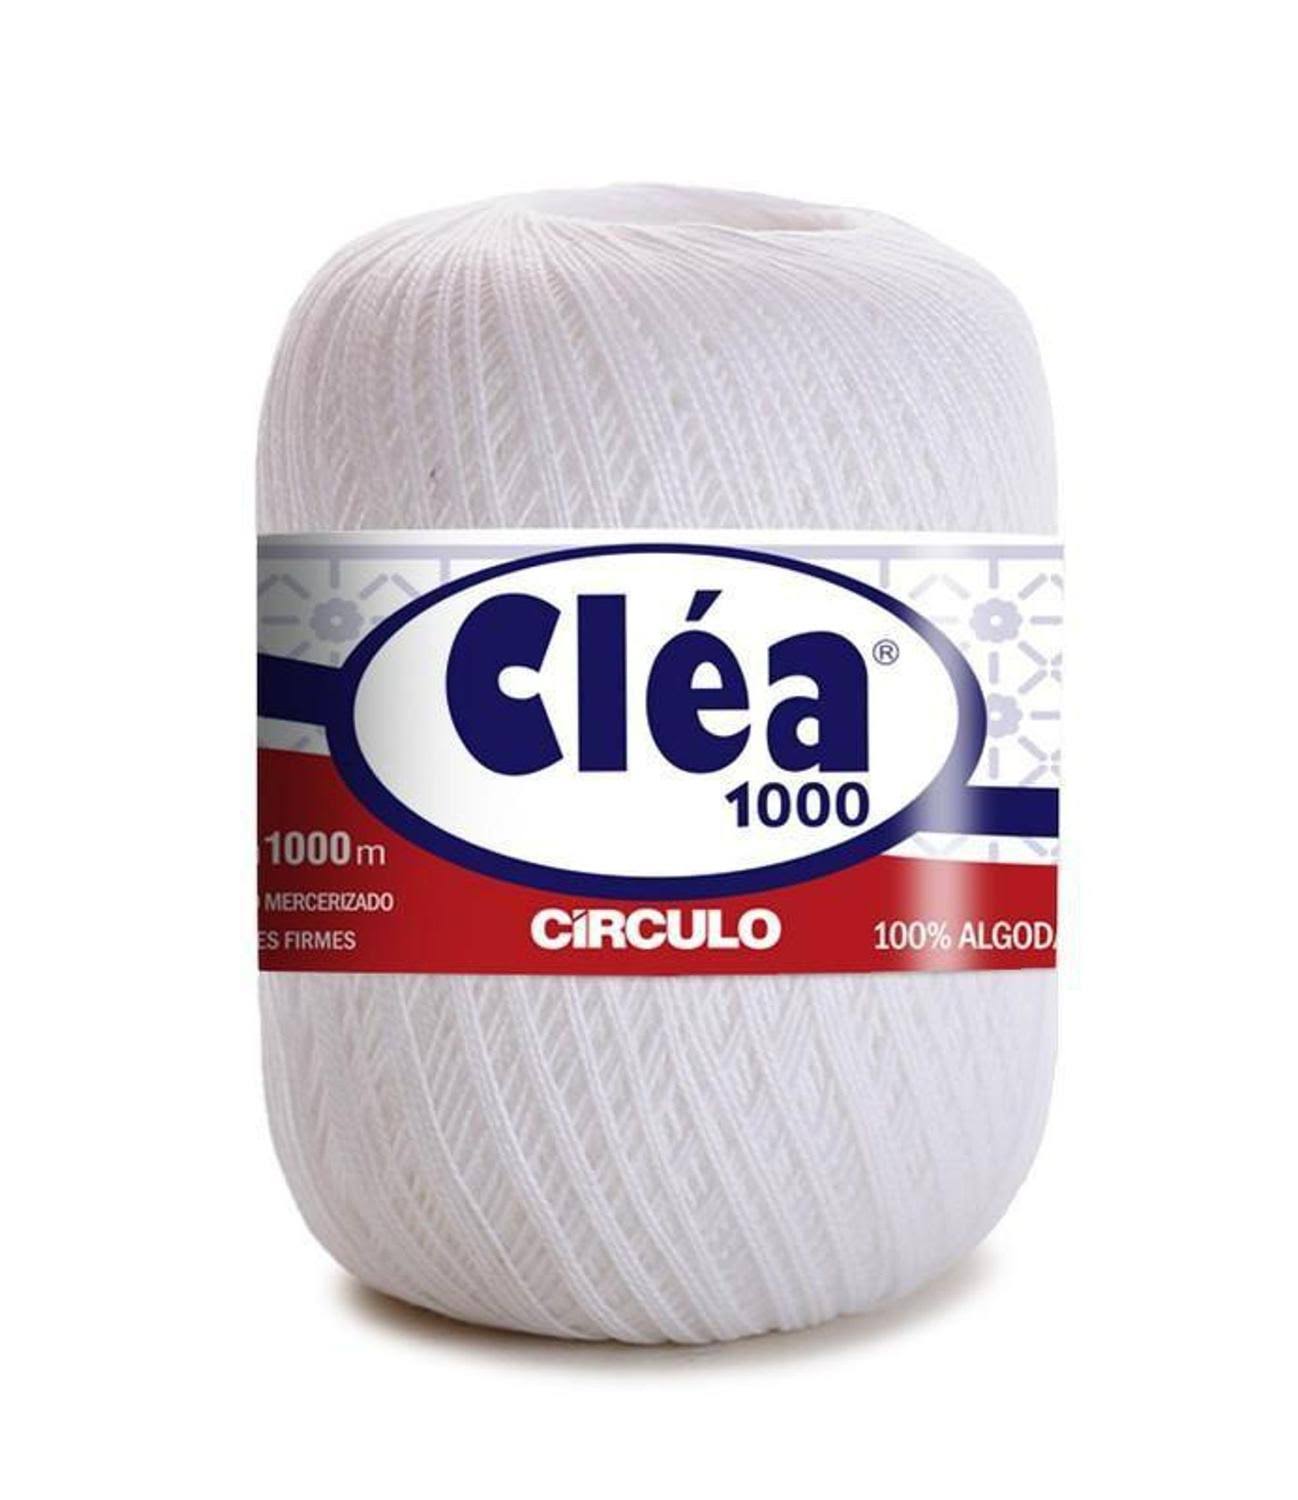 Crochet Cotton Thread - White, Size 10